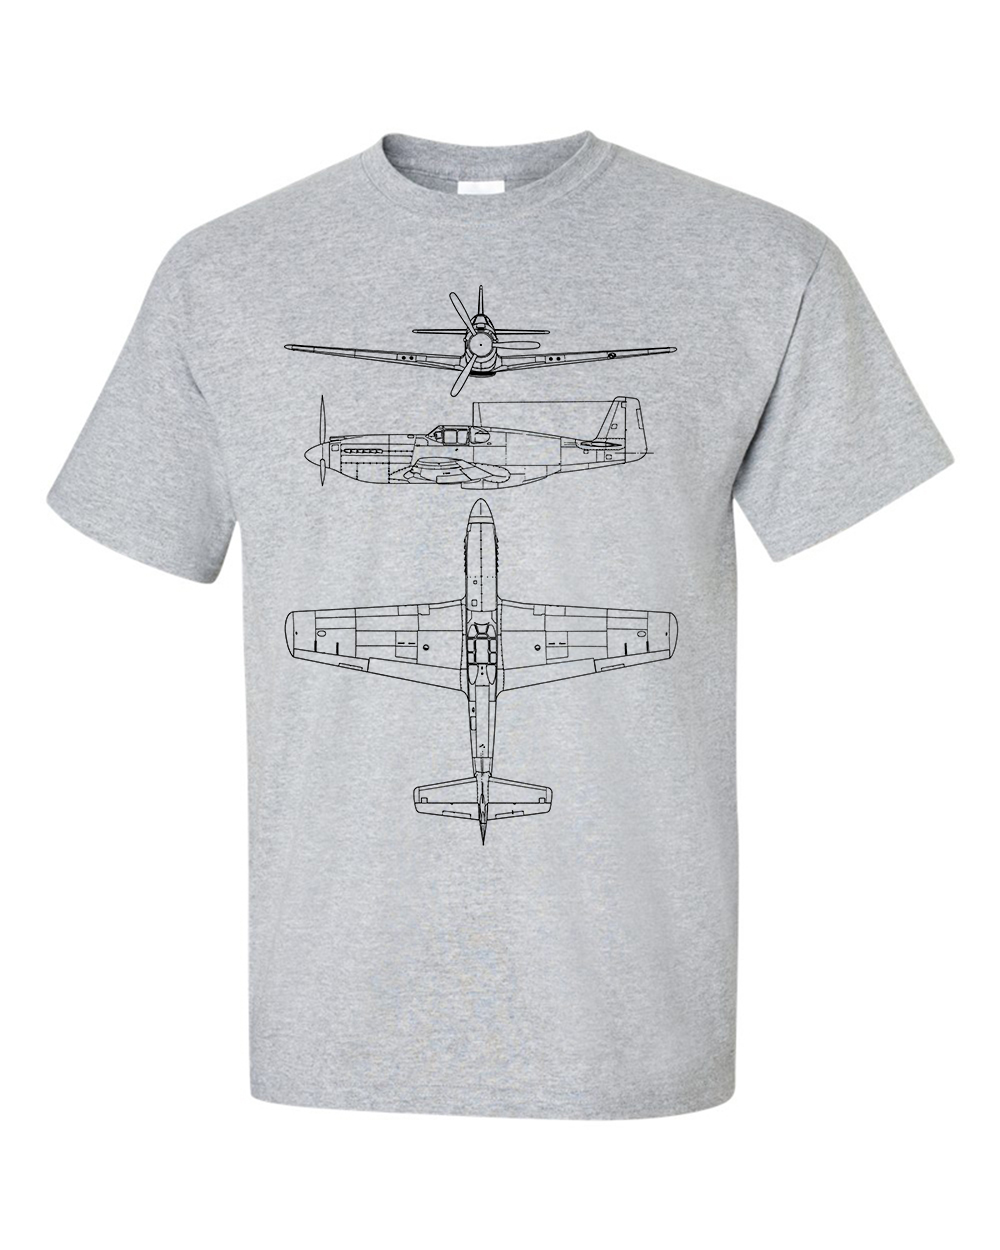 P51 Mustang T-Shirt Fighter Technical Drawing Blueprint USAF WW2 Fighter Aircraft Shirt